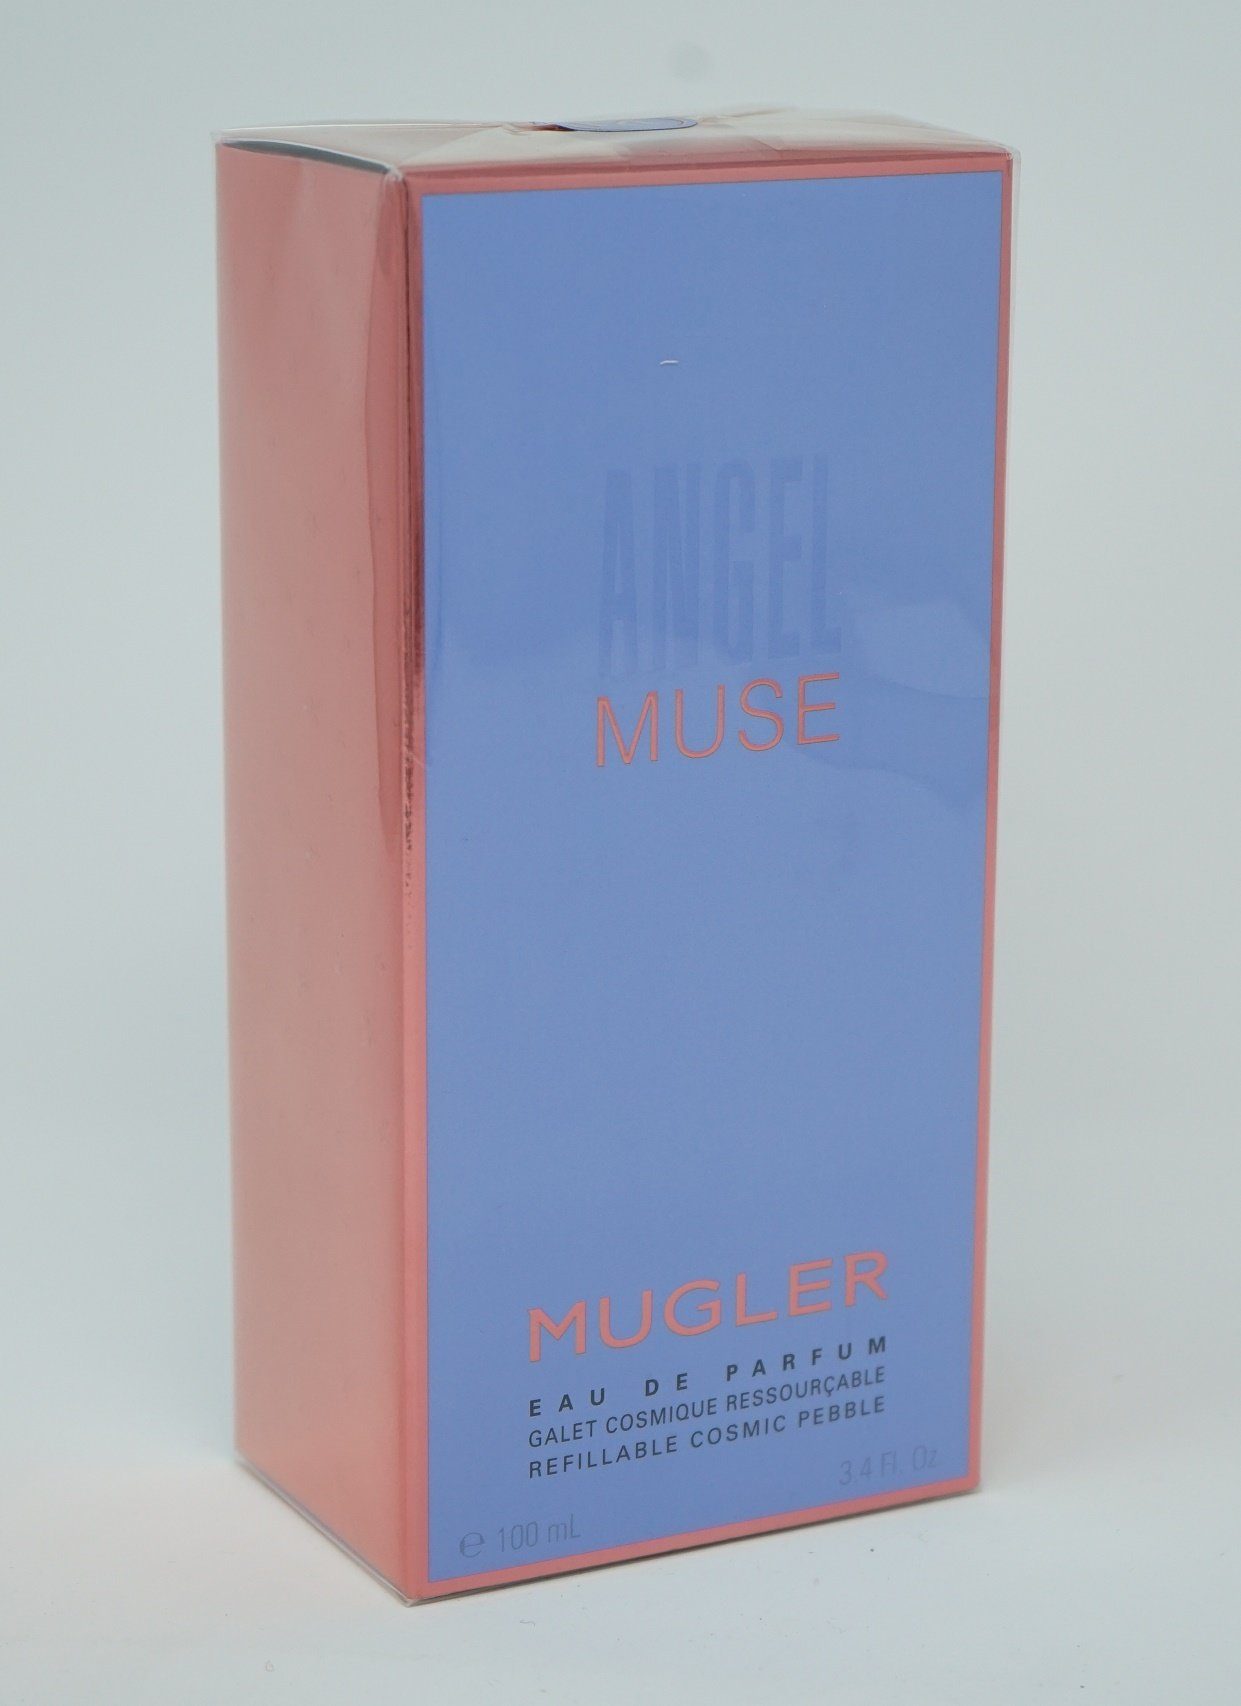 Thierry Mugler Eau de Parfum Thierry Mugler Angel Muse Eau de parfum Reffilable 100ml